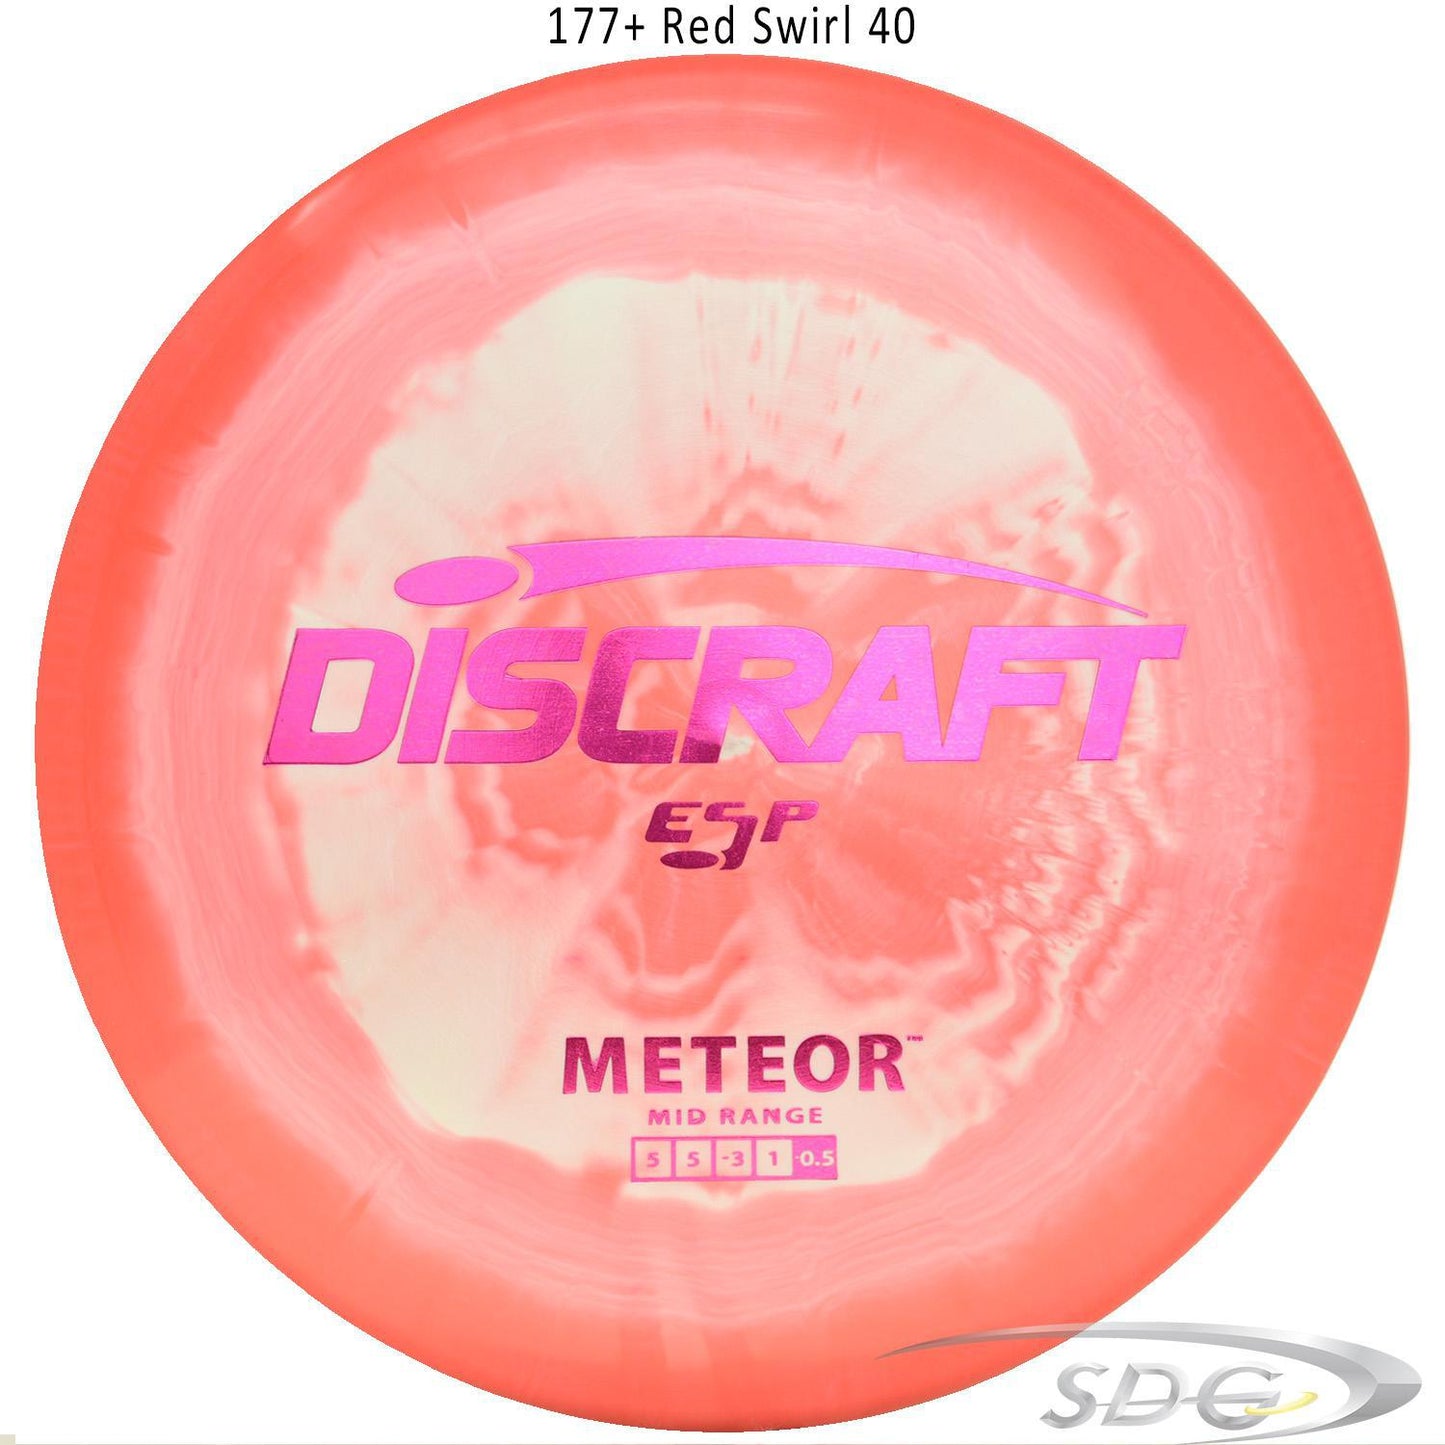 discraft-esp-meteor-disc-golf-mid-range 177+ Red Swirl 40